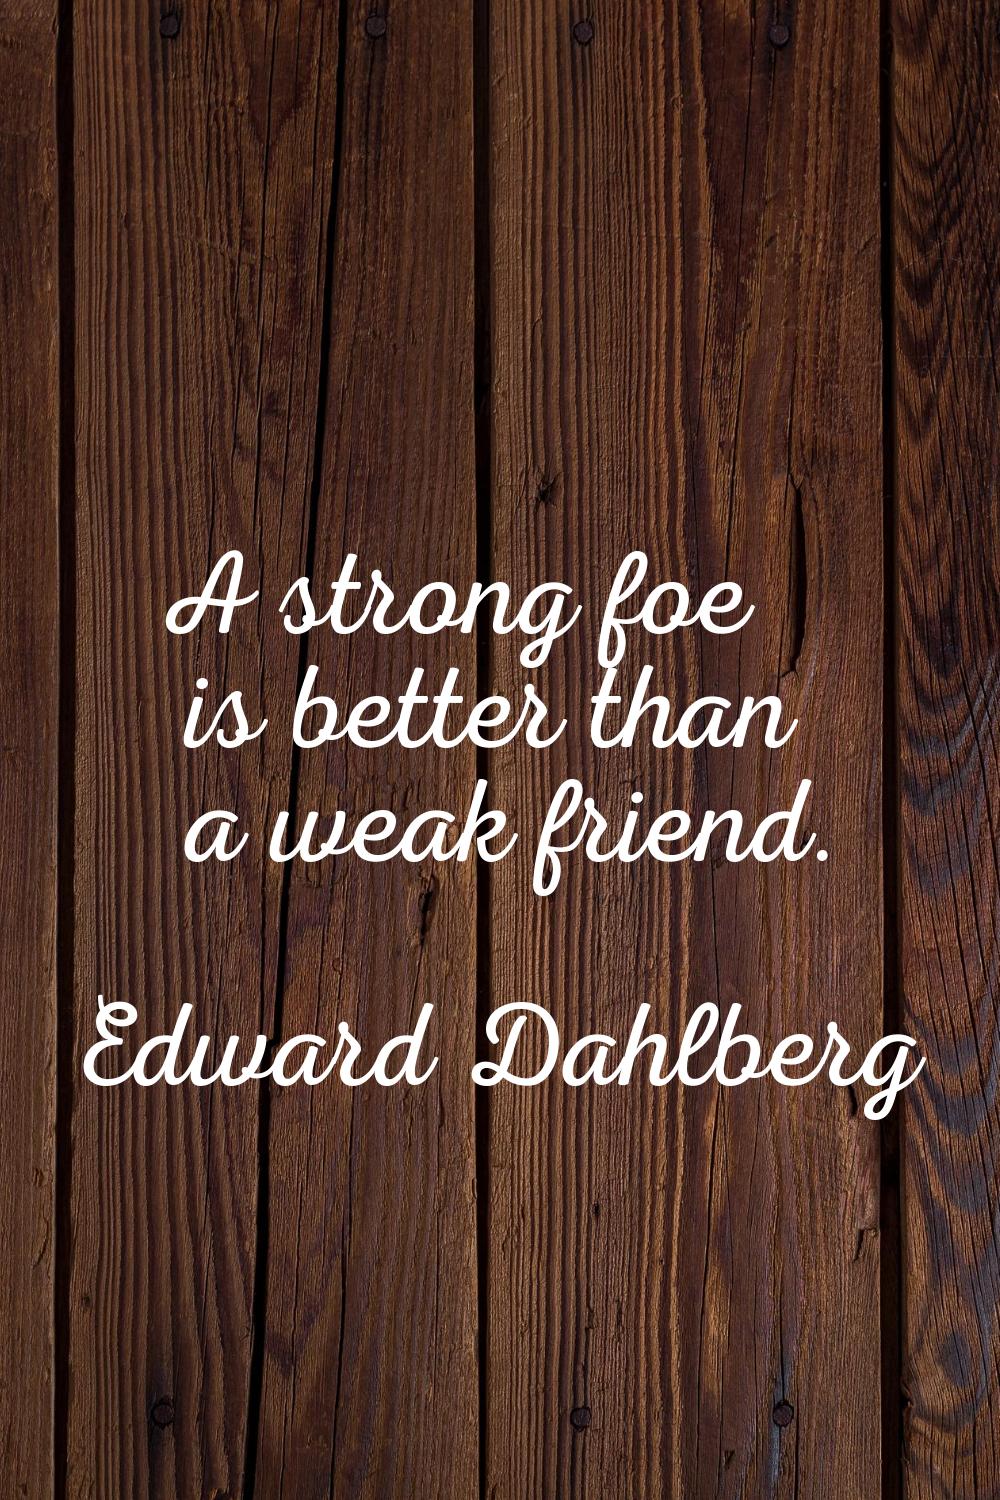 A strong foe is better than a weak friend.